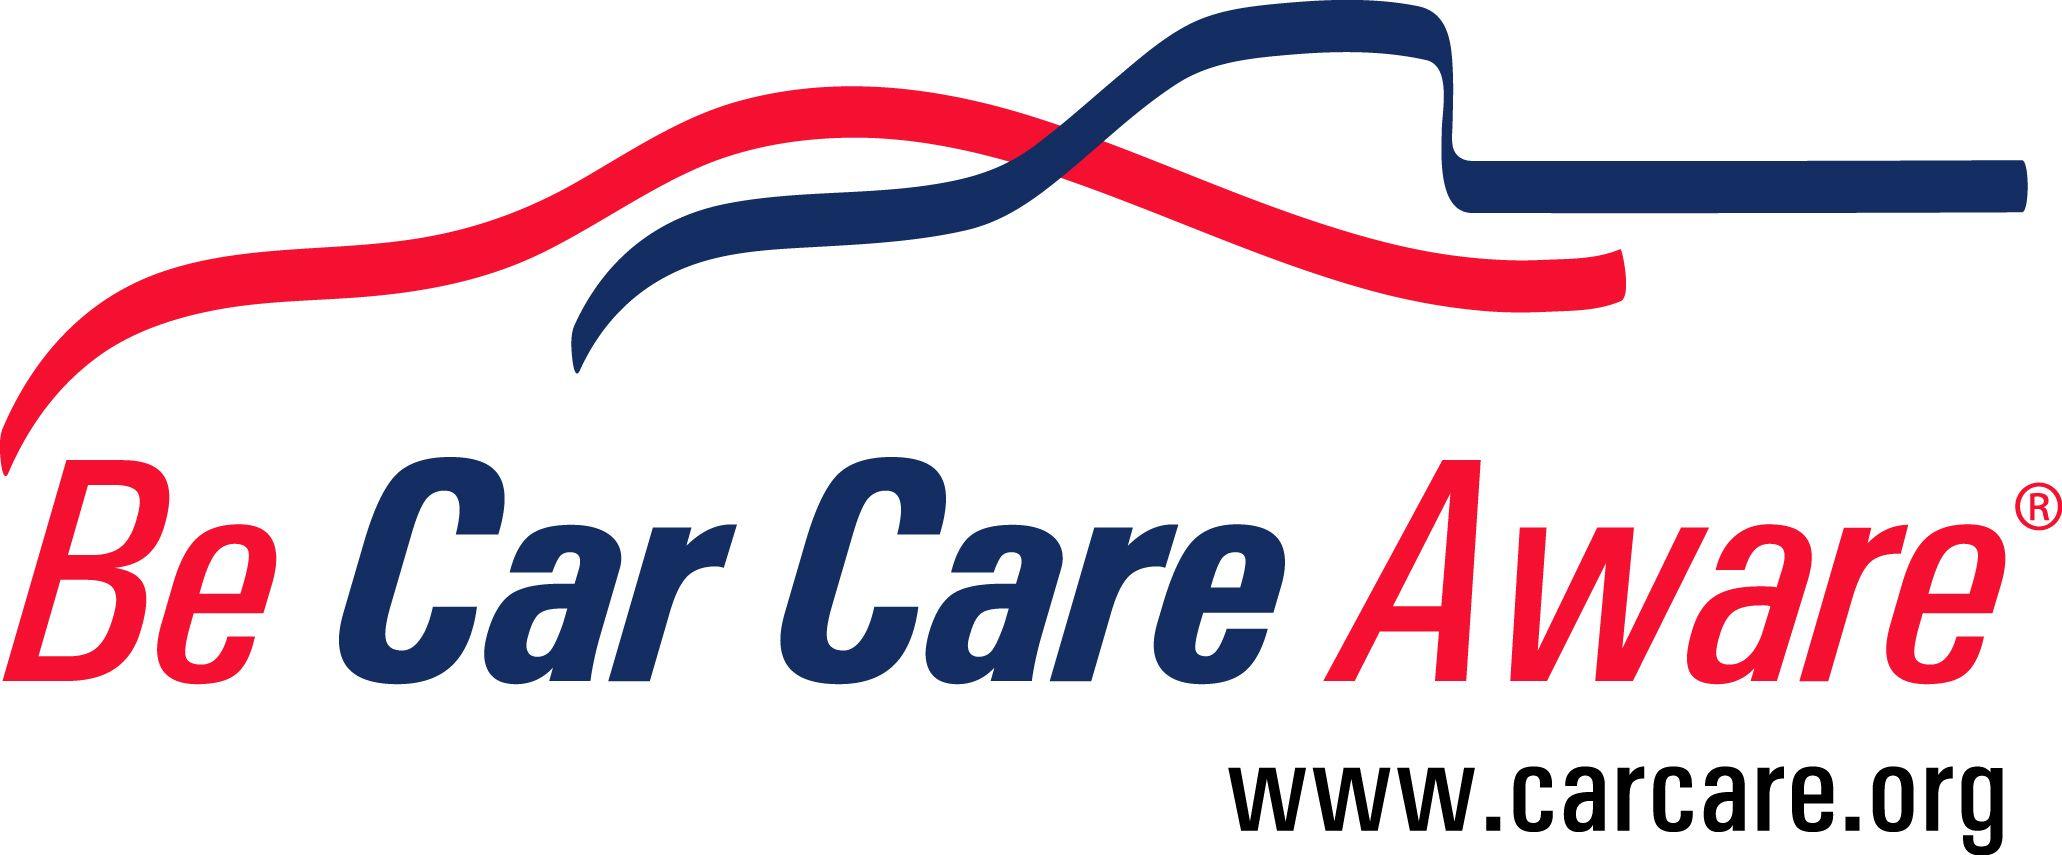 Care.org Logo - Logos | Be Car Care Aware